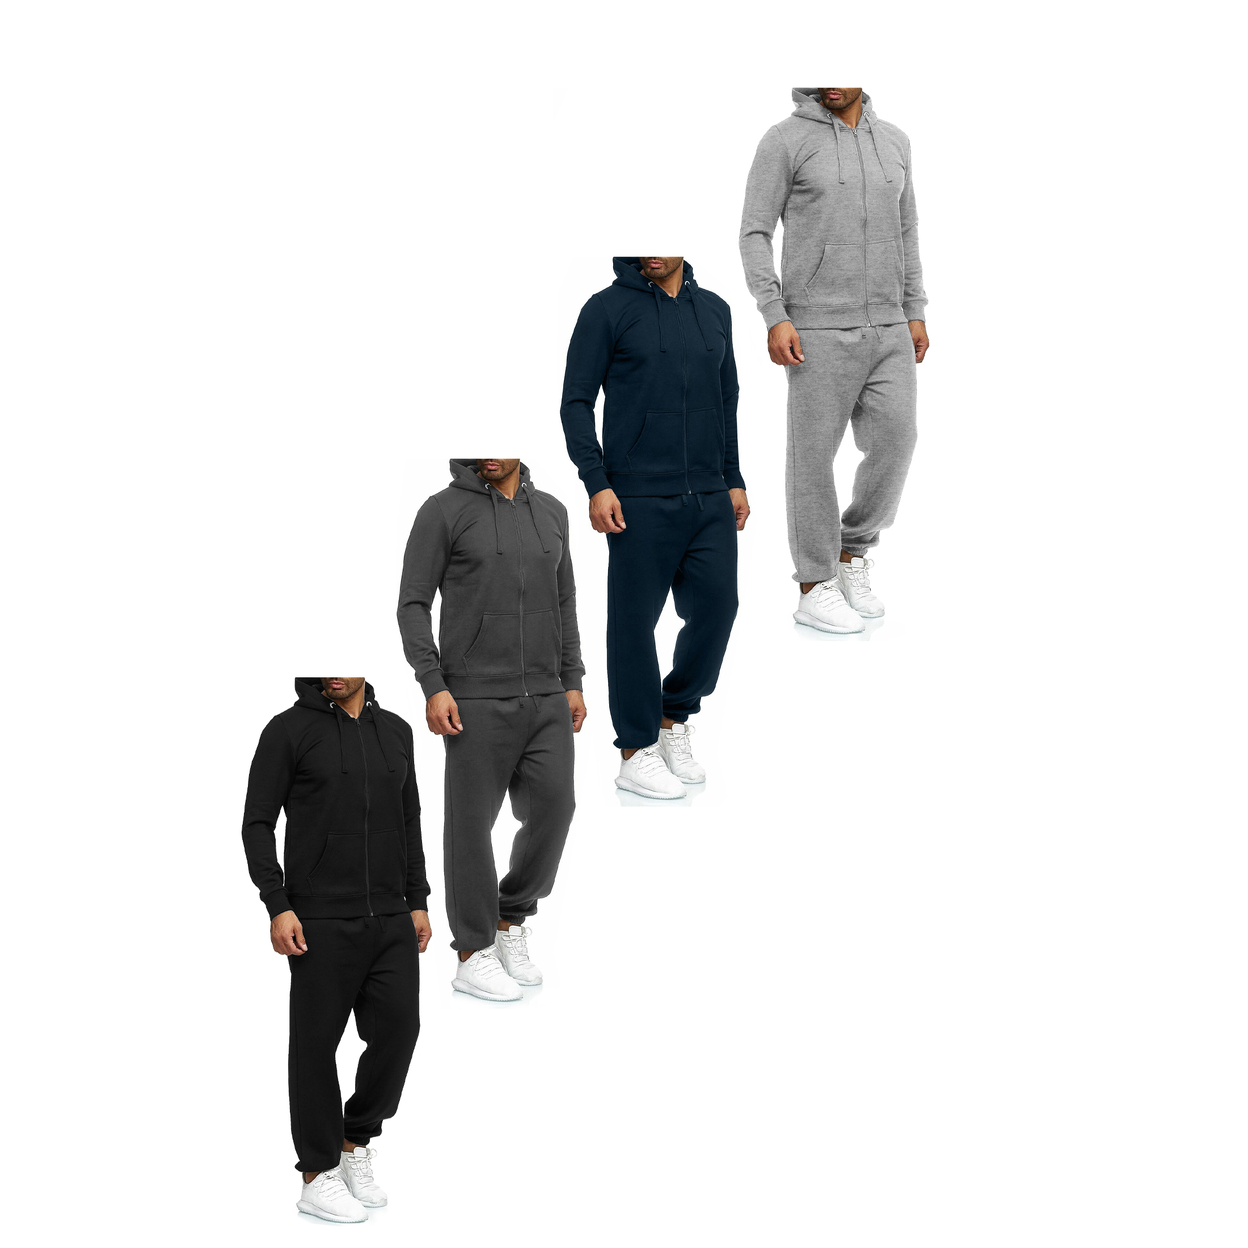 2-Pack: Men's Casual Big & Tall Athletic Active Winter Warm Fleece Lined Full Zip Tracksuit Jogger Set - Black, Medium